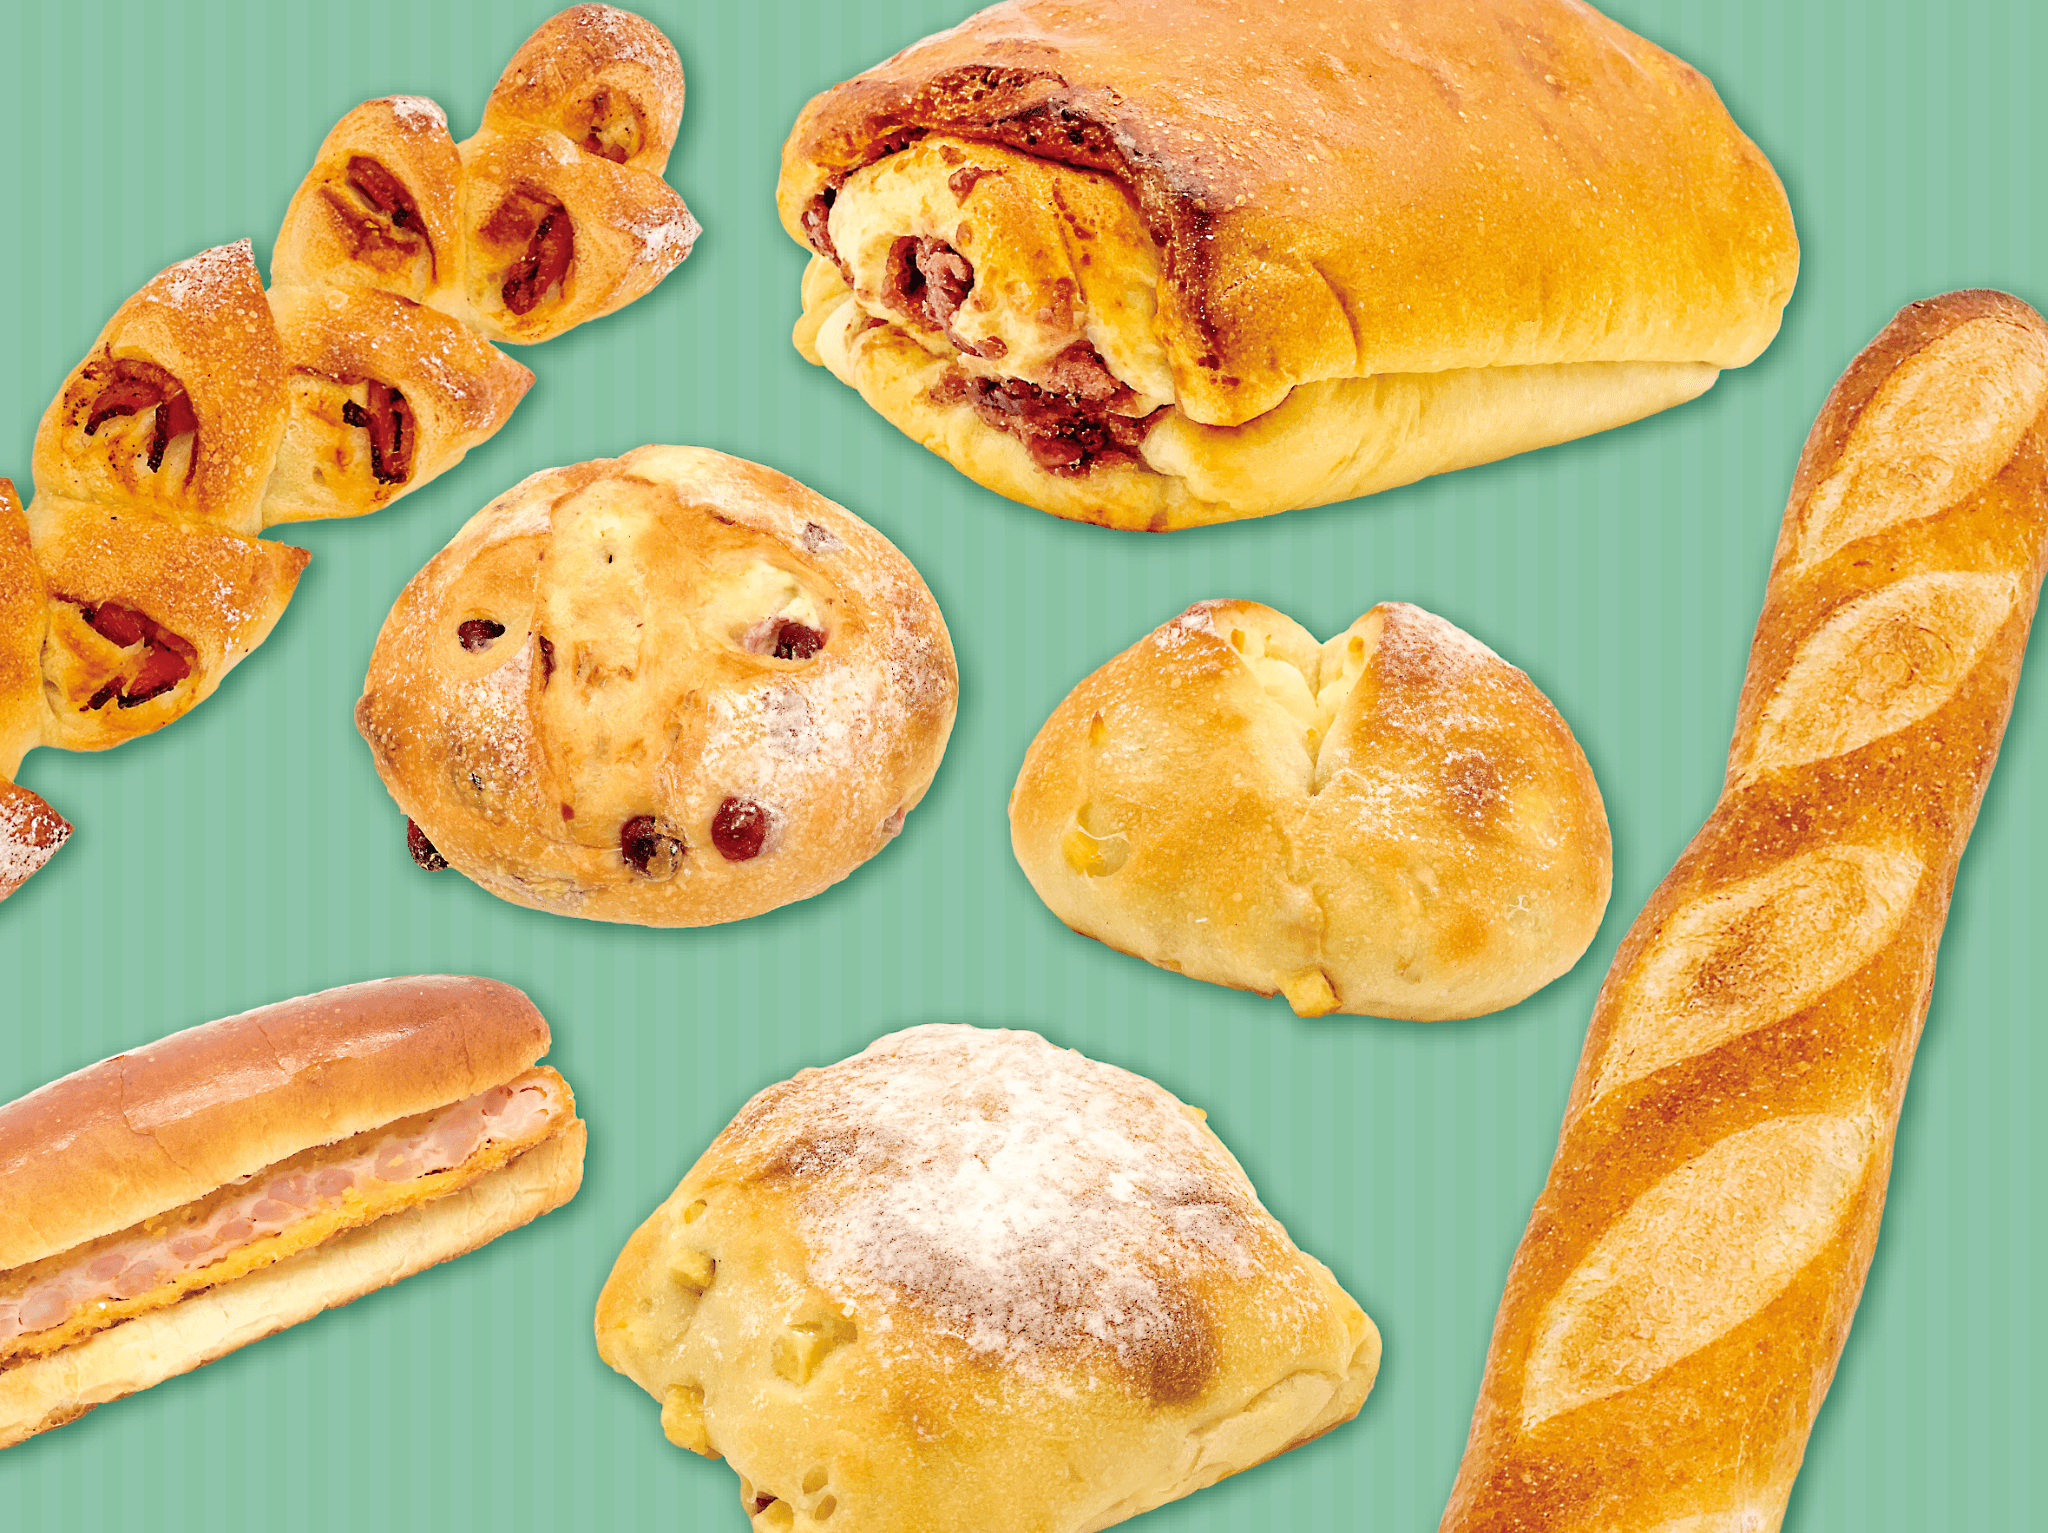 We love パン！―佐渡のパン特集―